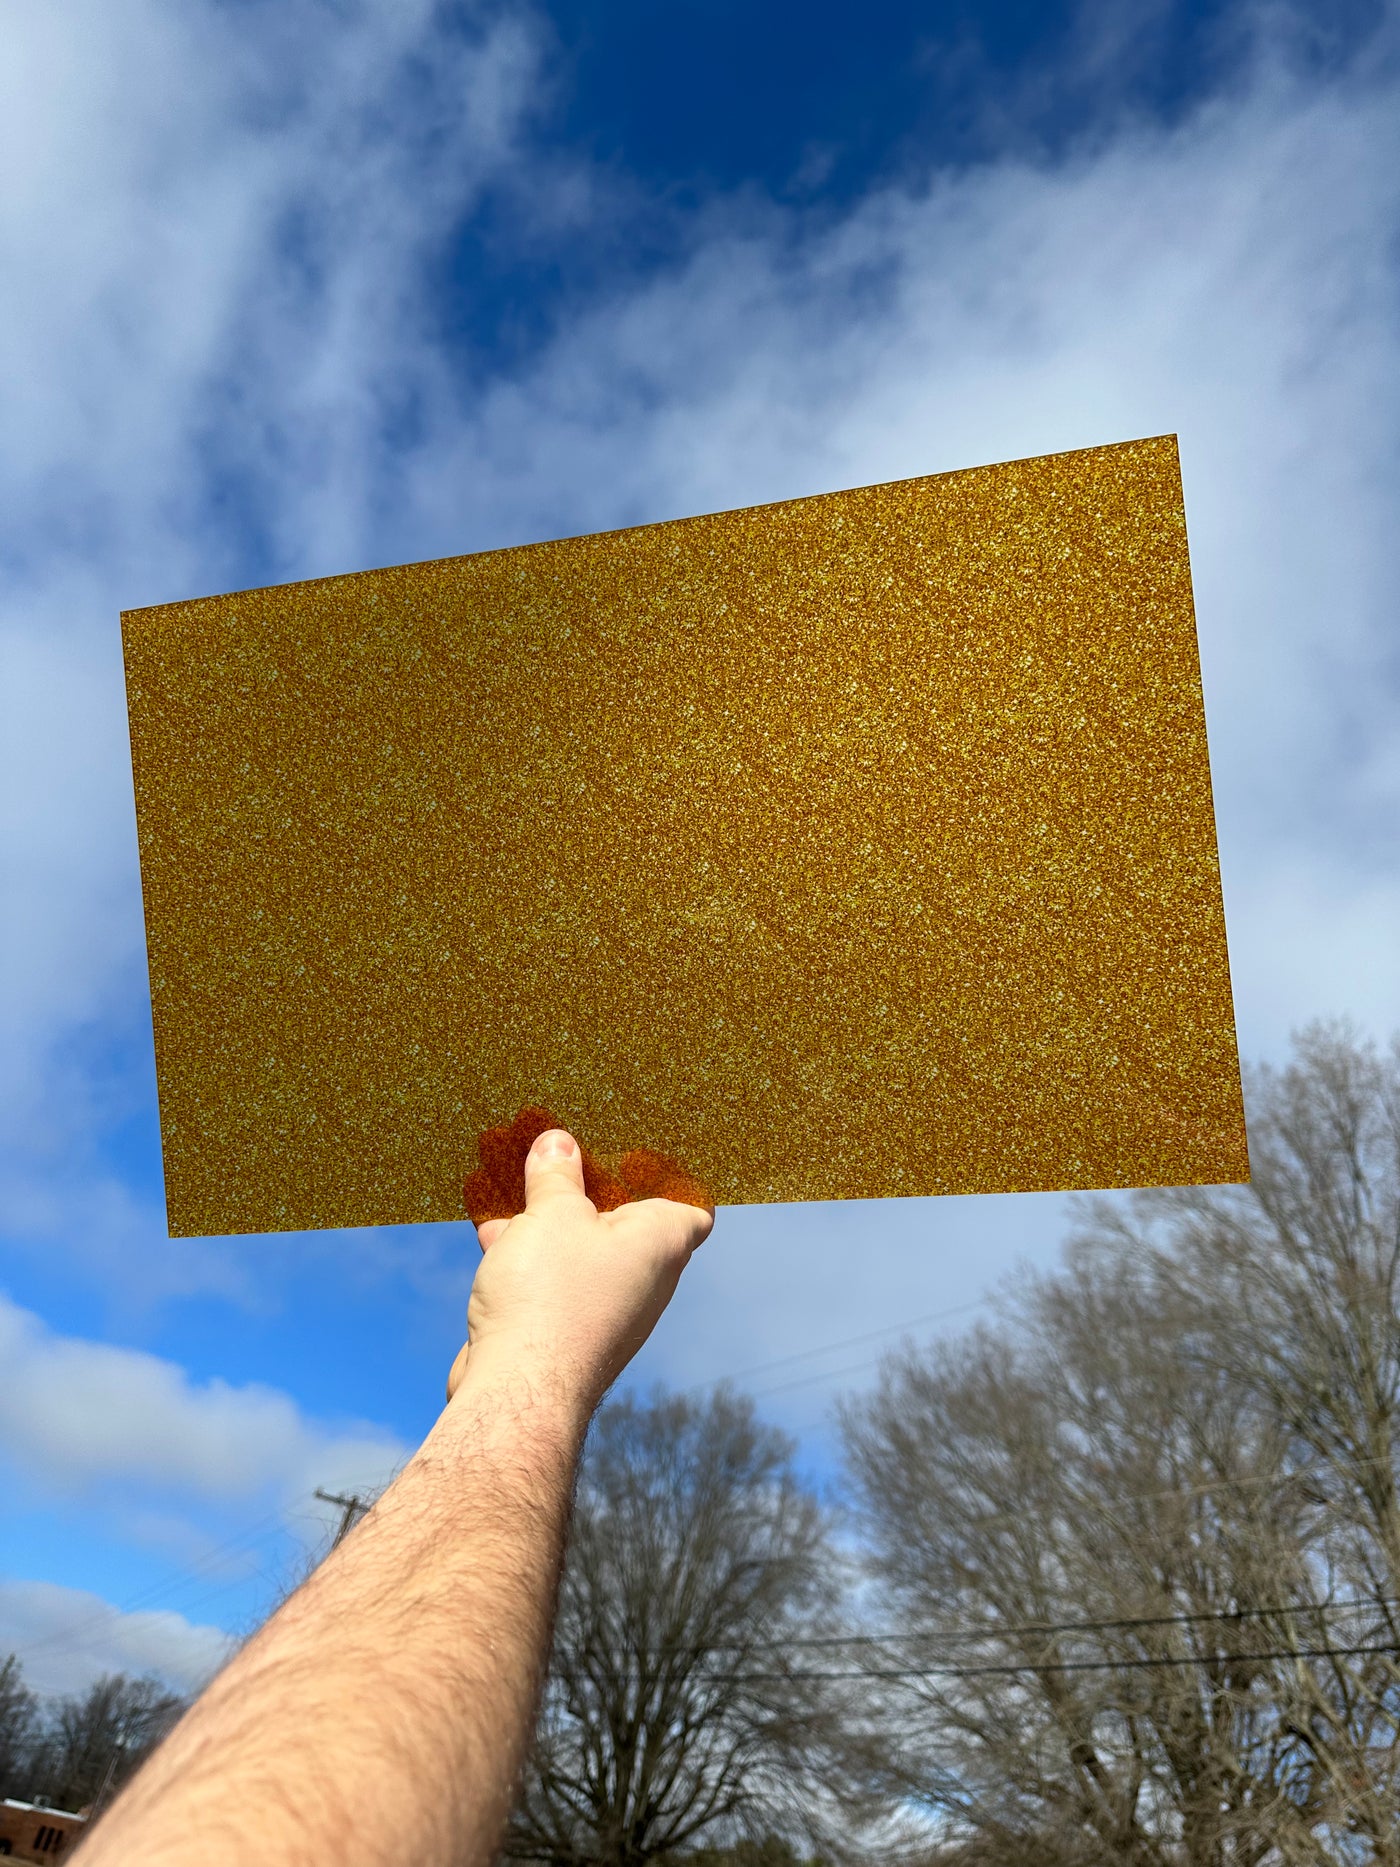 PatternPly® Acrylic Transparent Gold Glitter*